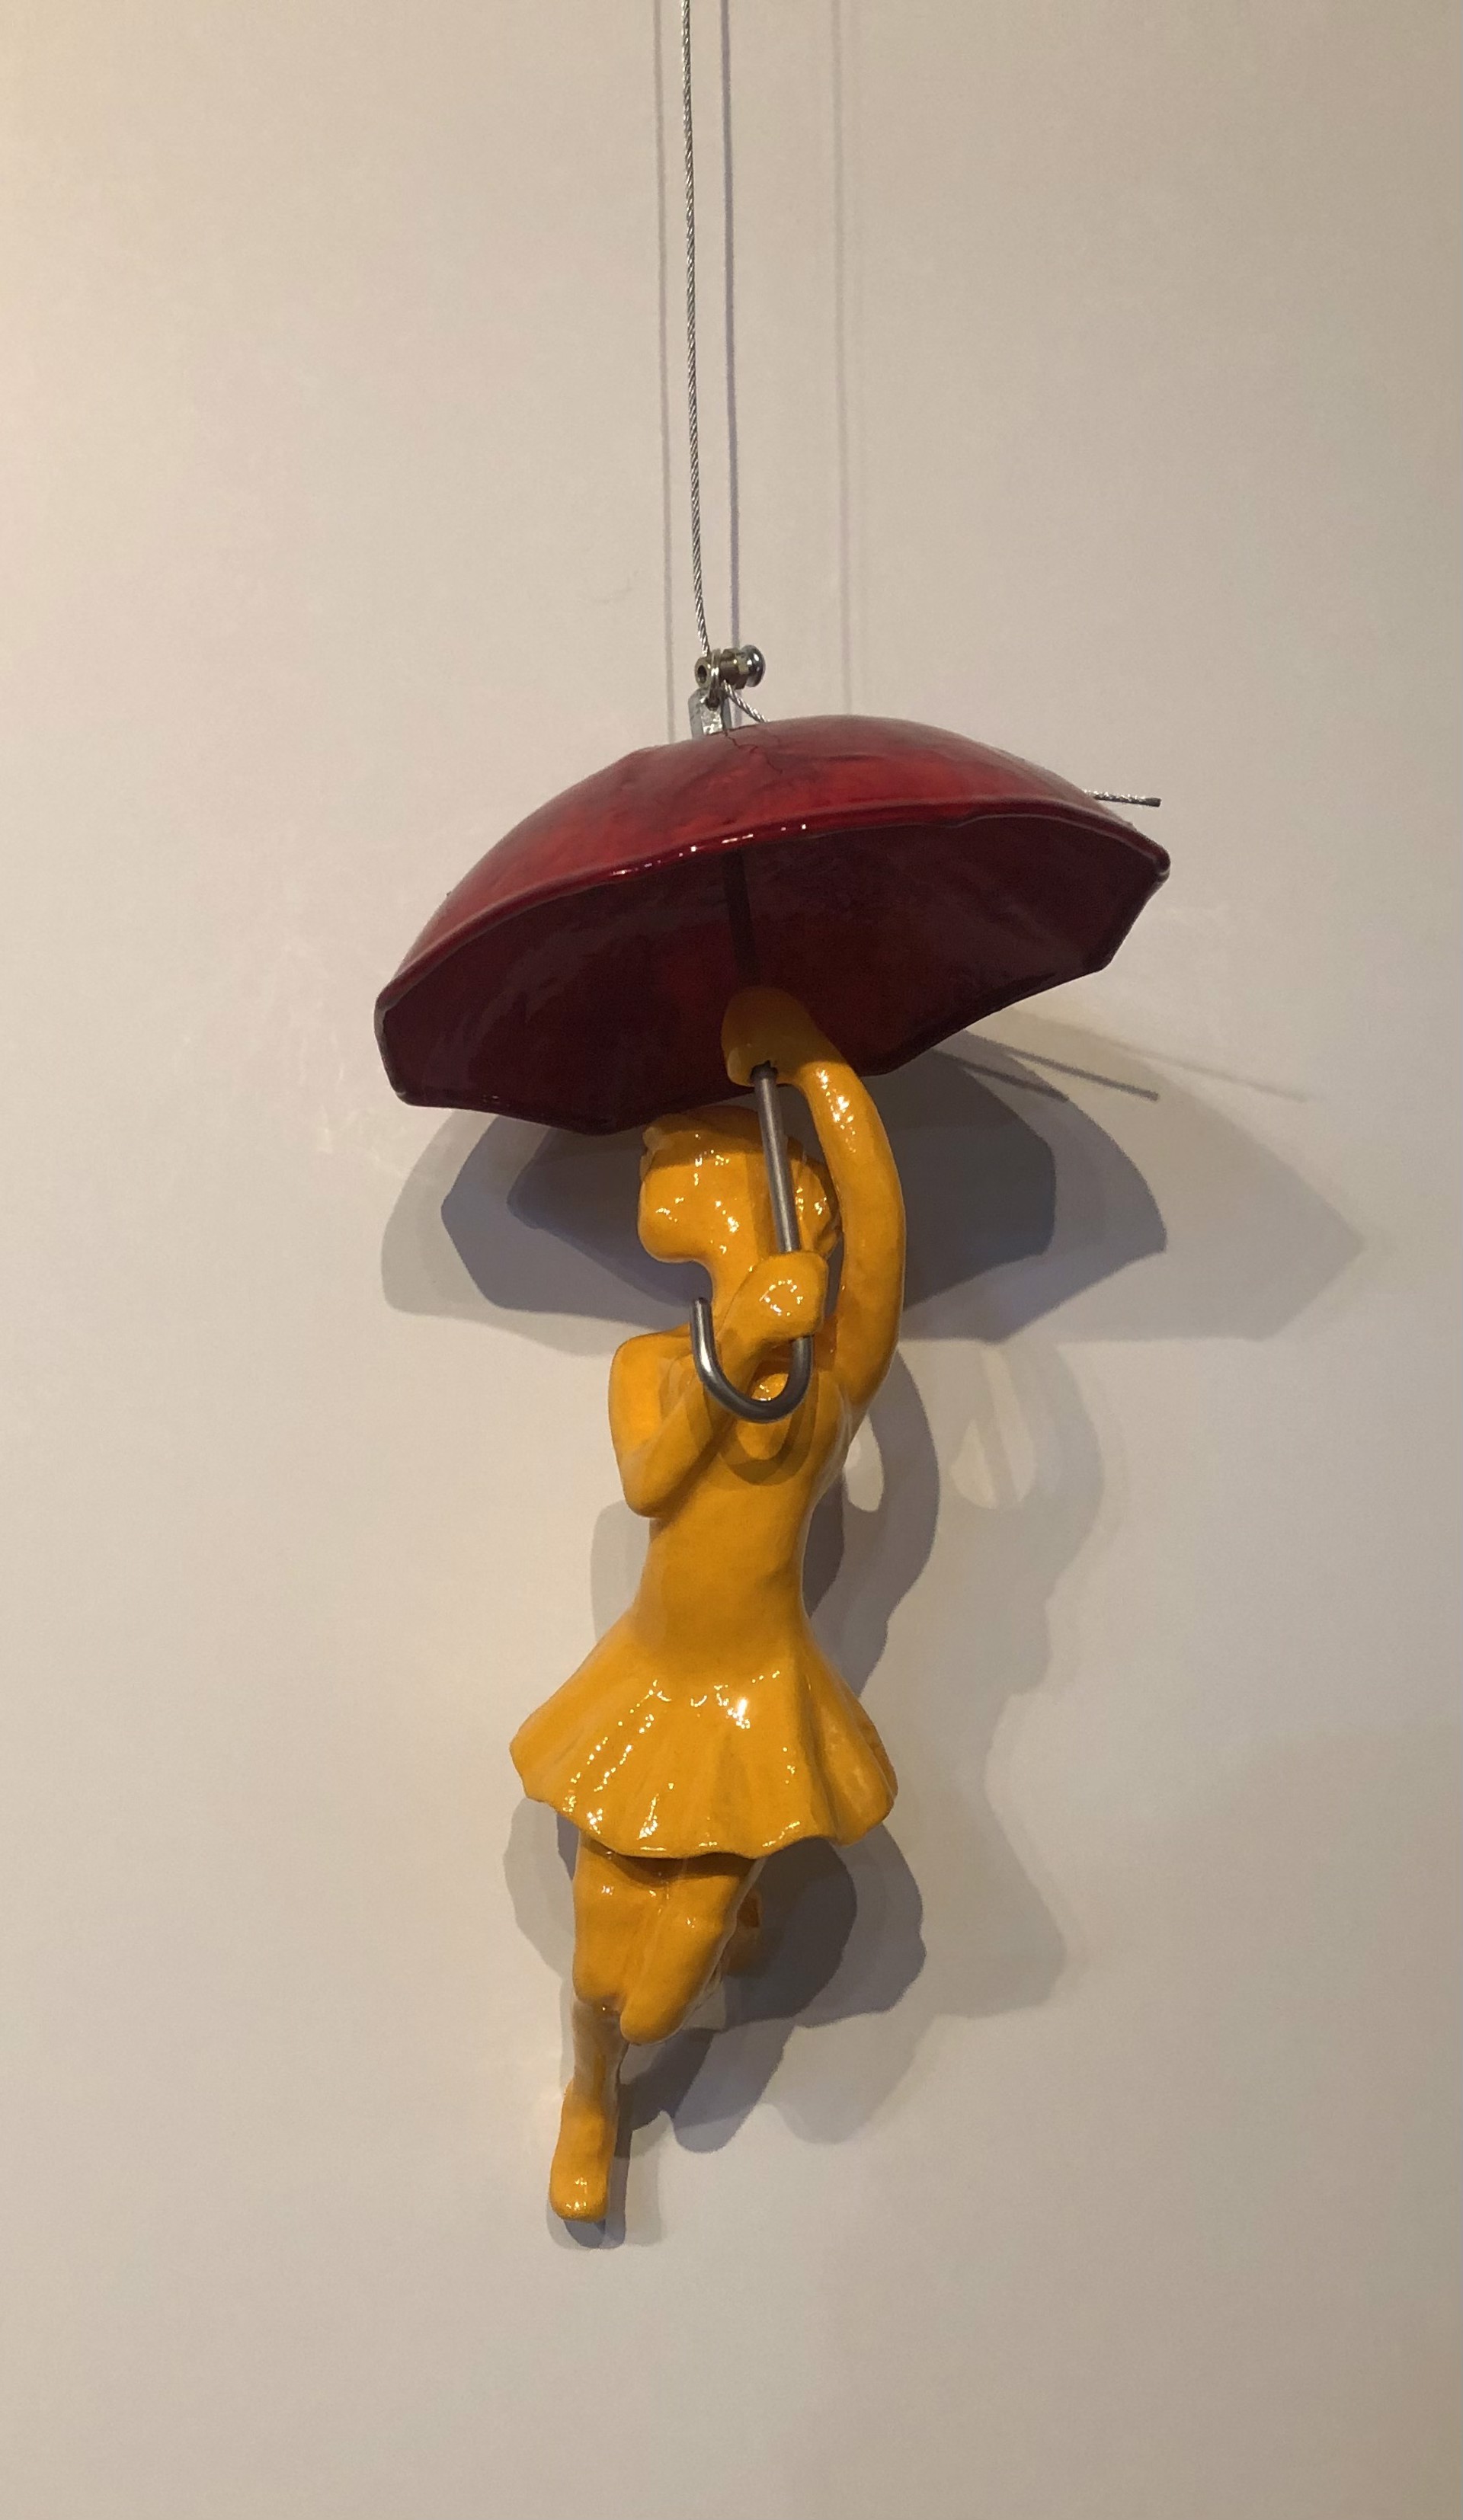 Ballerina with Umbrella (Red/ Yellow) by Ancizar Marin